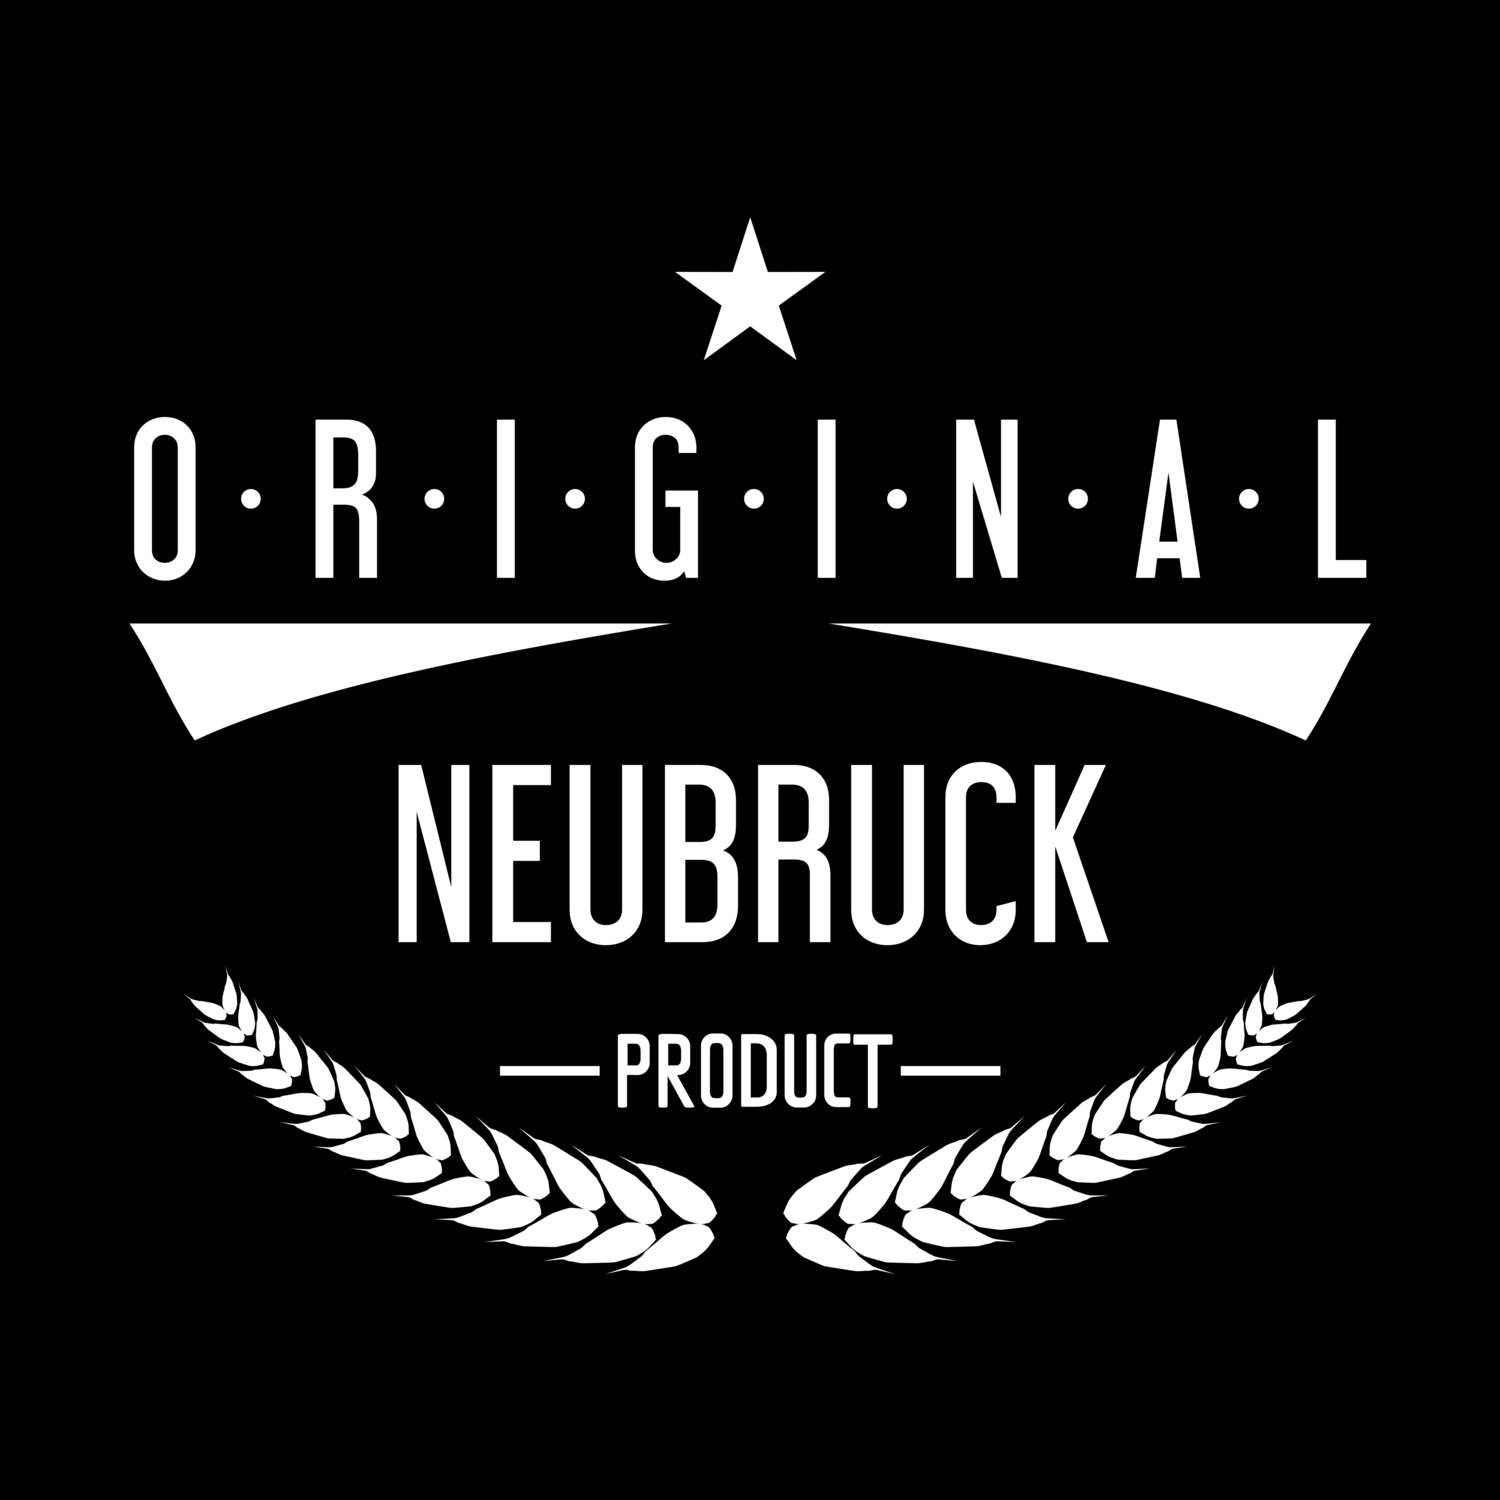 Neubruck T-Shirt »Original Product«